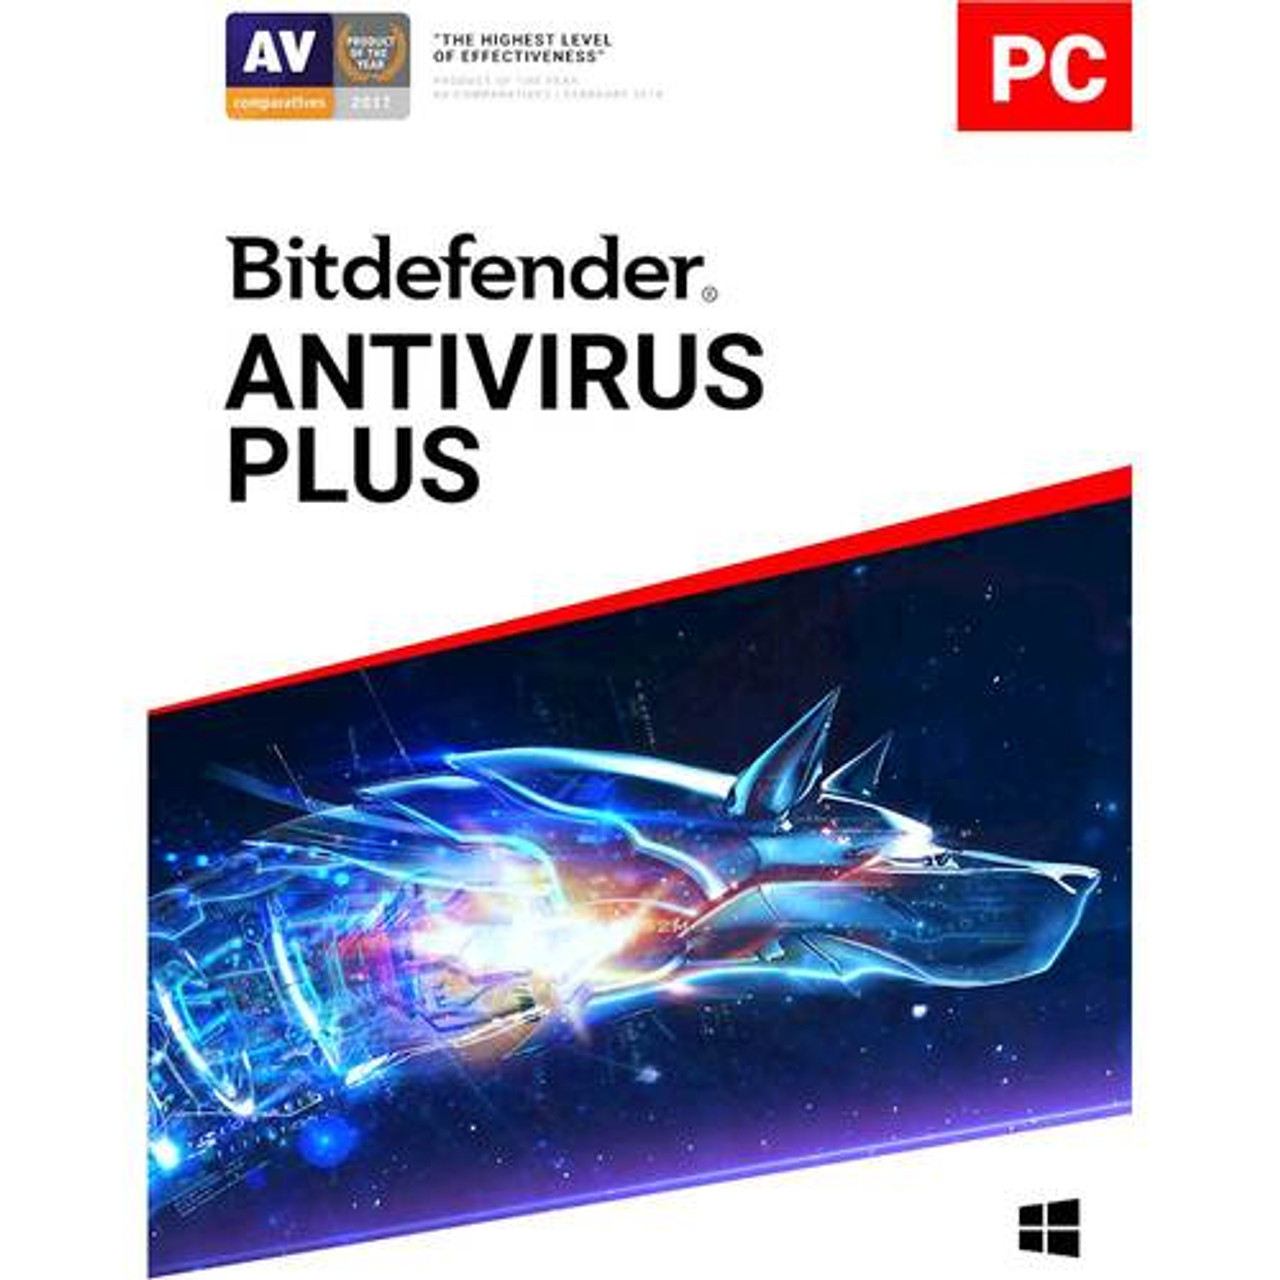 Bitdefender Antivirus Plus (3-Device) (2-Year Subscription) - Windows